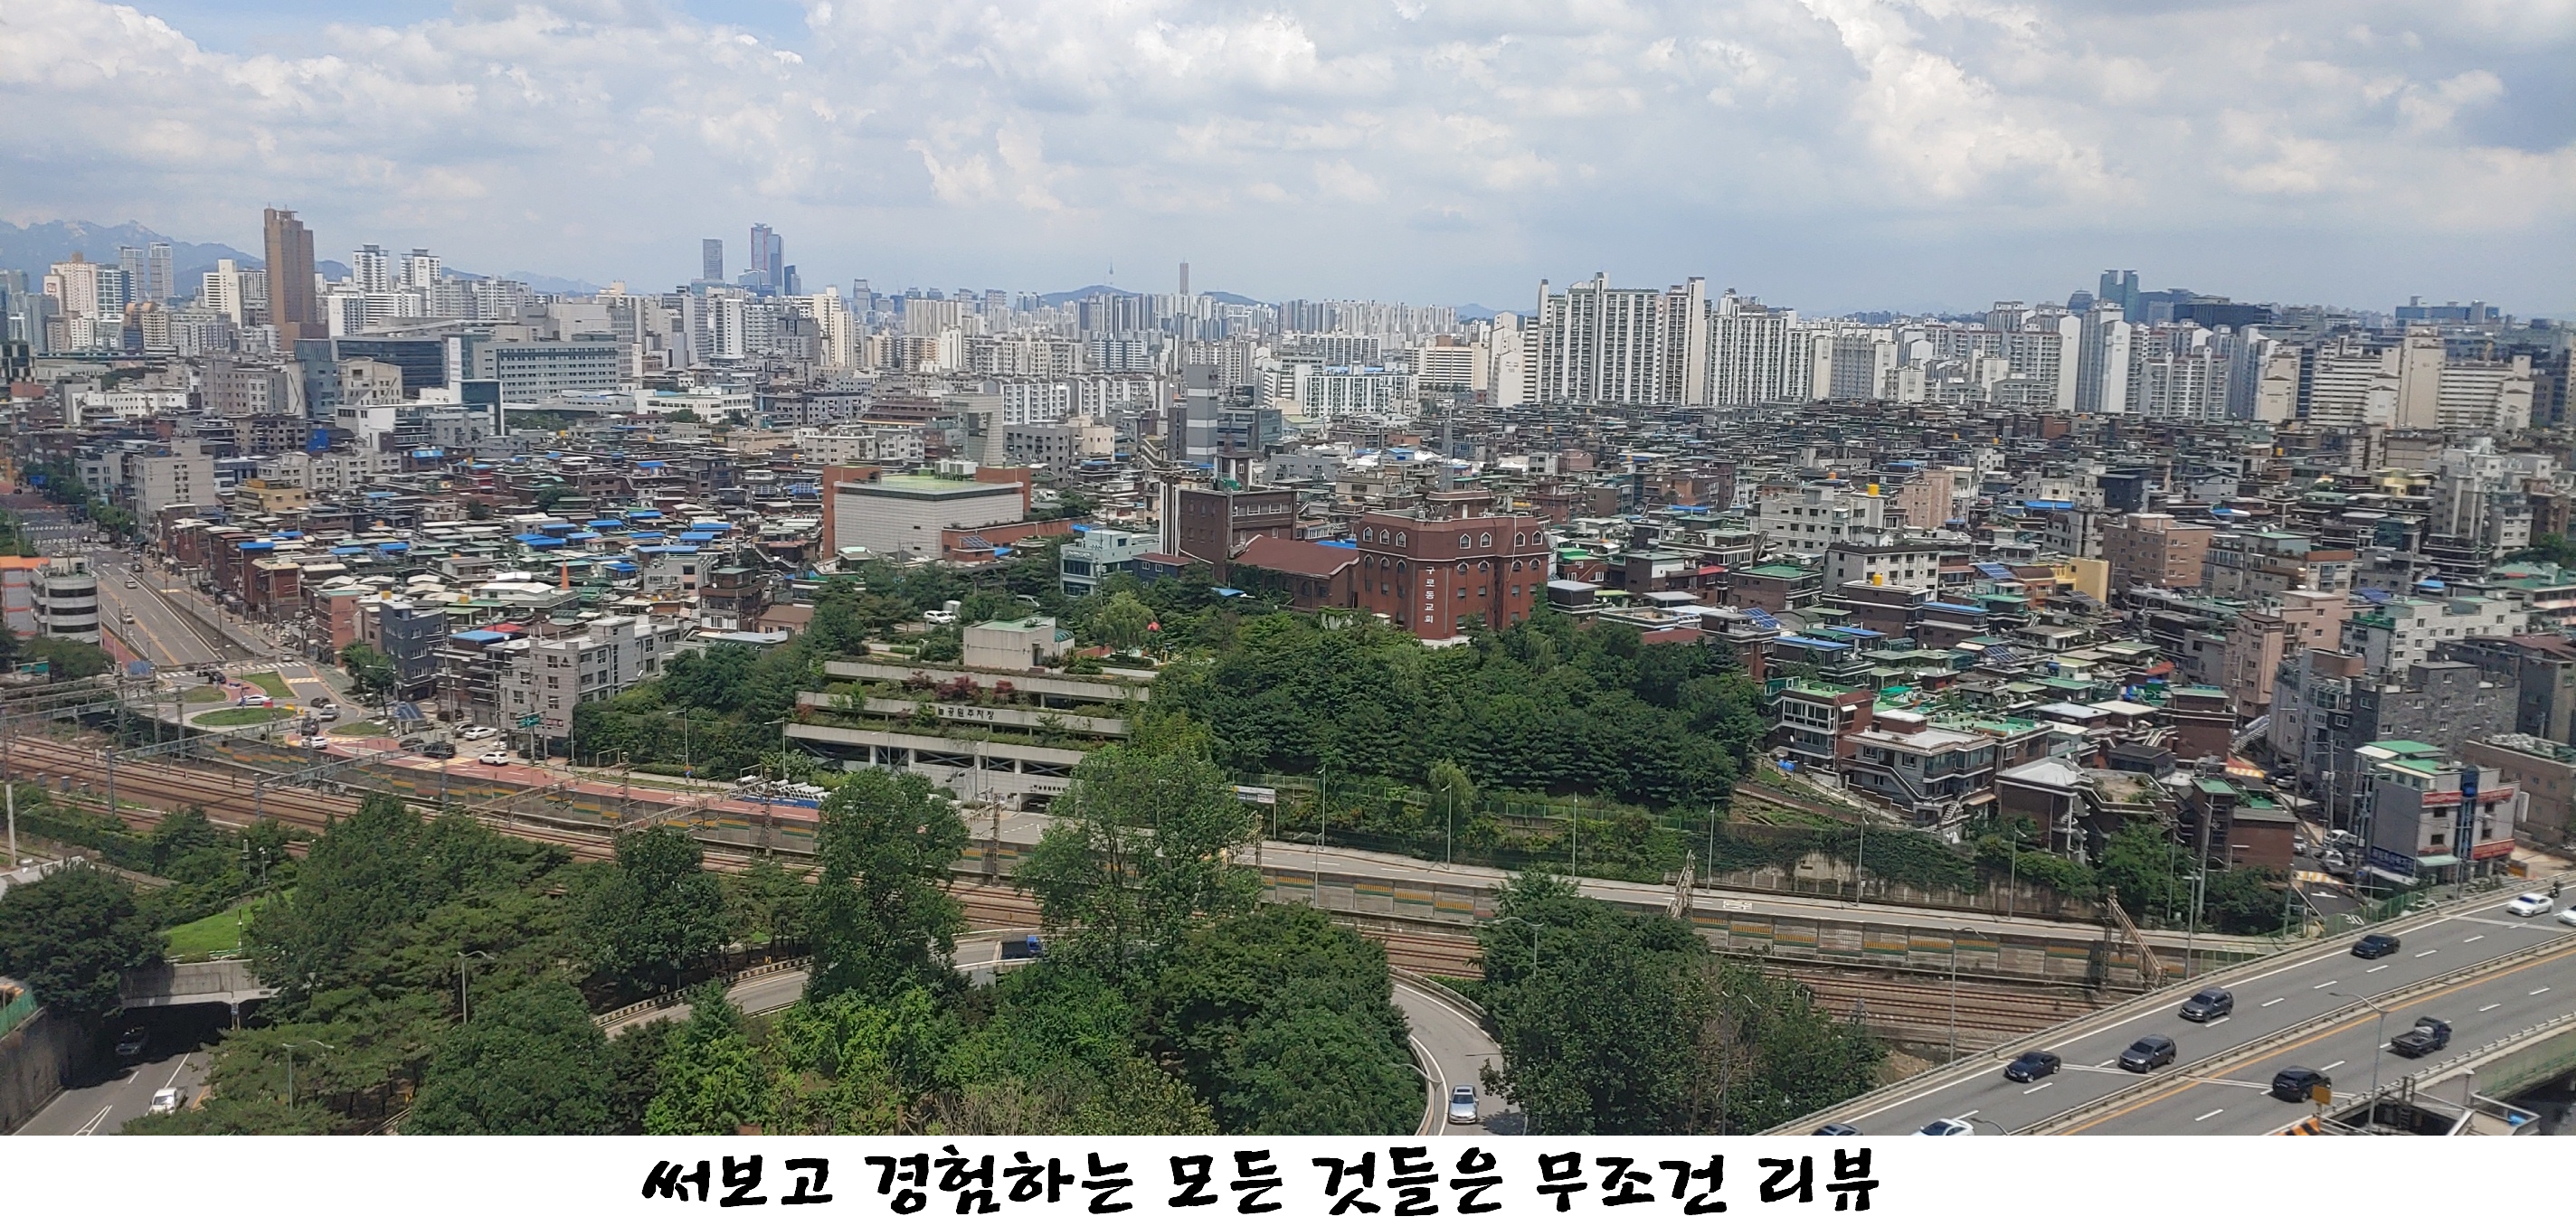 220701&#44; Seoul&#44; 사진&#44; 서울&#44; 풍경&#44; 하늘